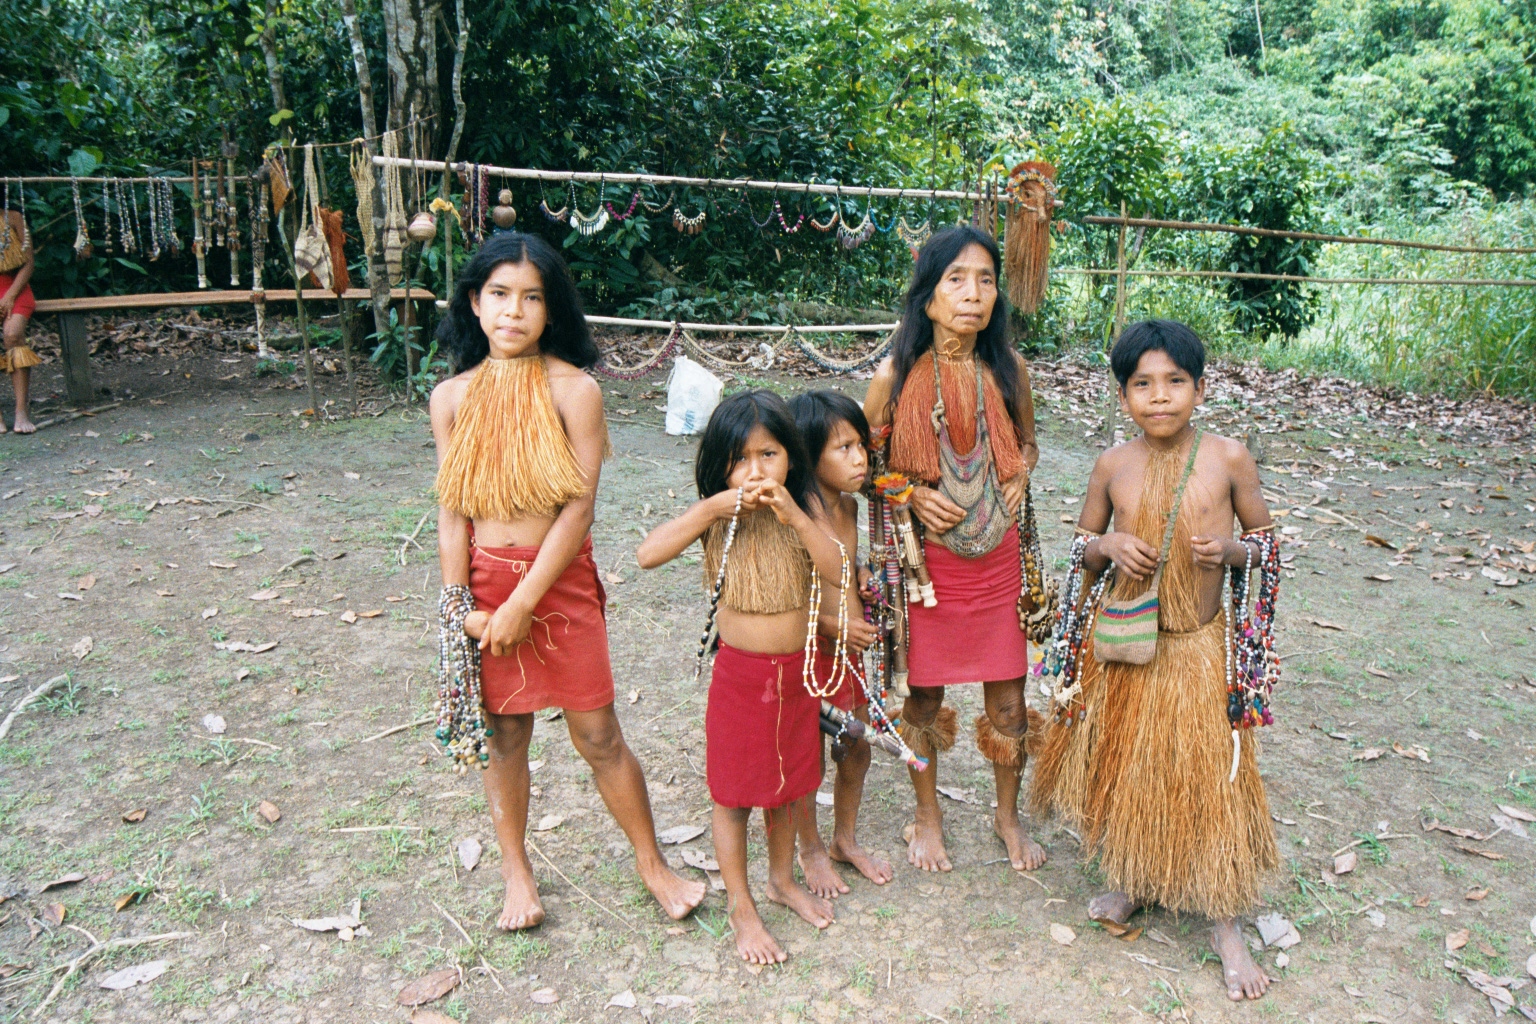 Local amazon tribe family on Sinchucuy lodge jungle trek near Iquitos, Peru - feb 2002